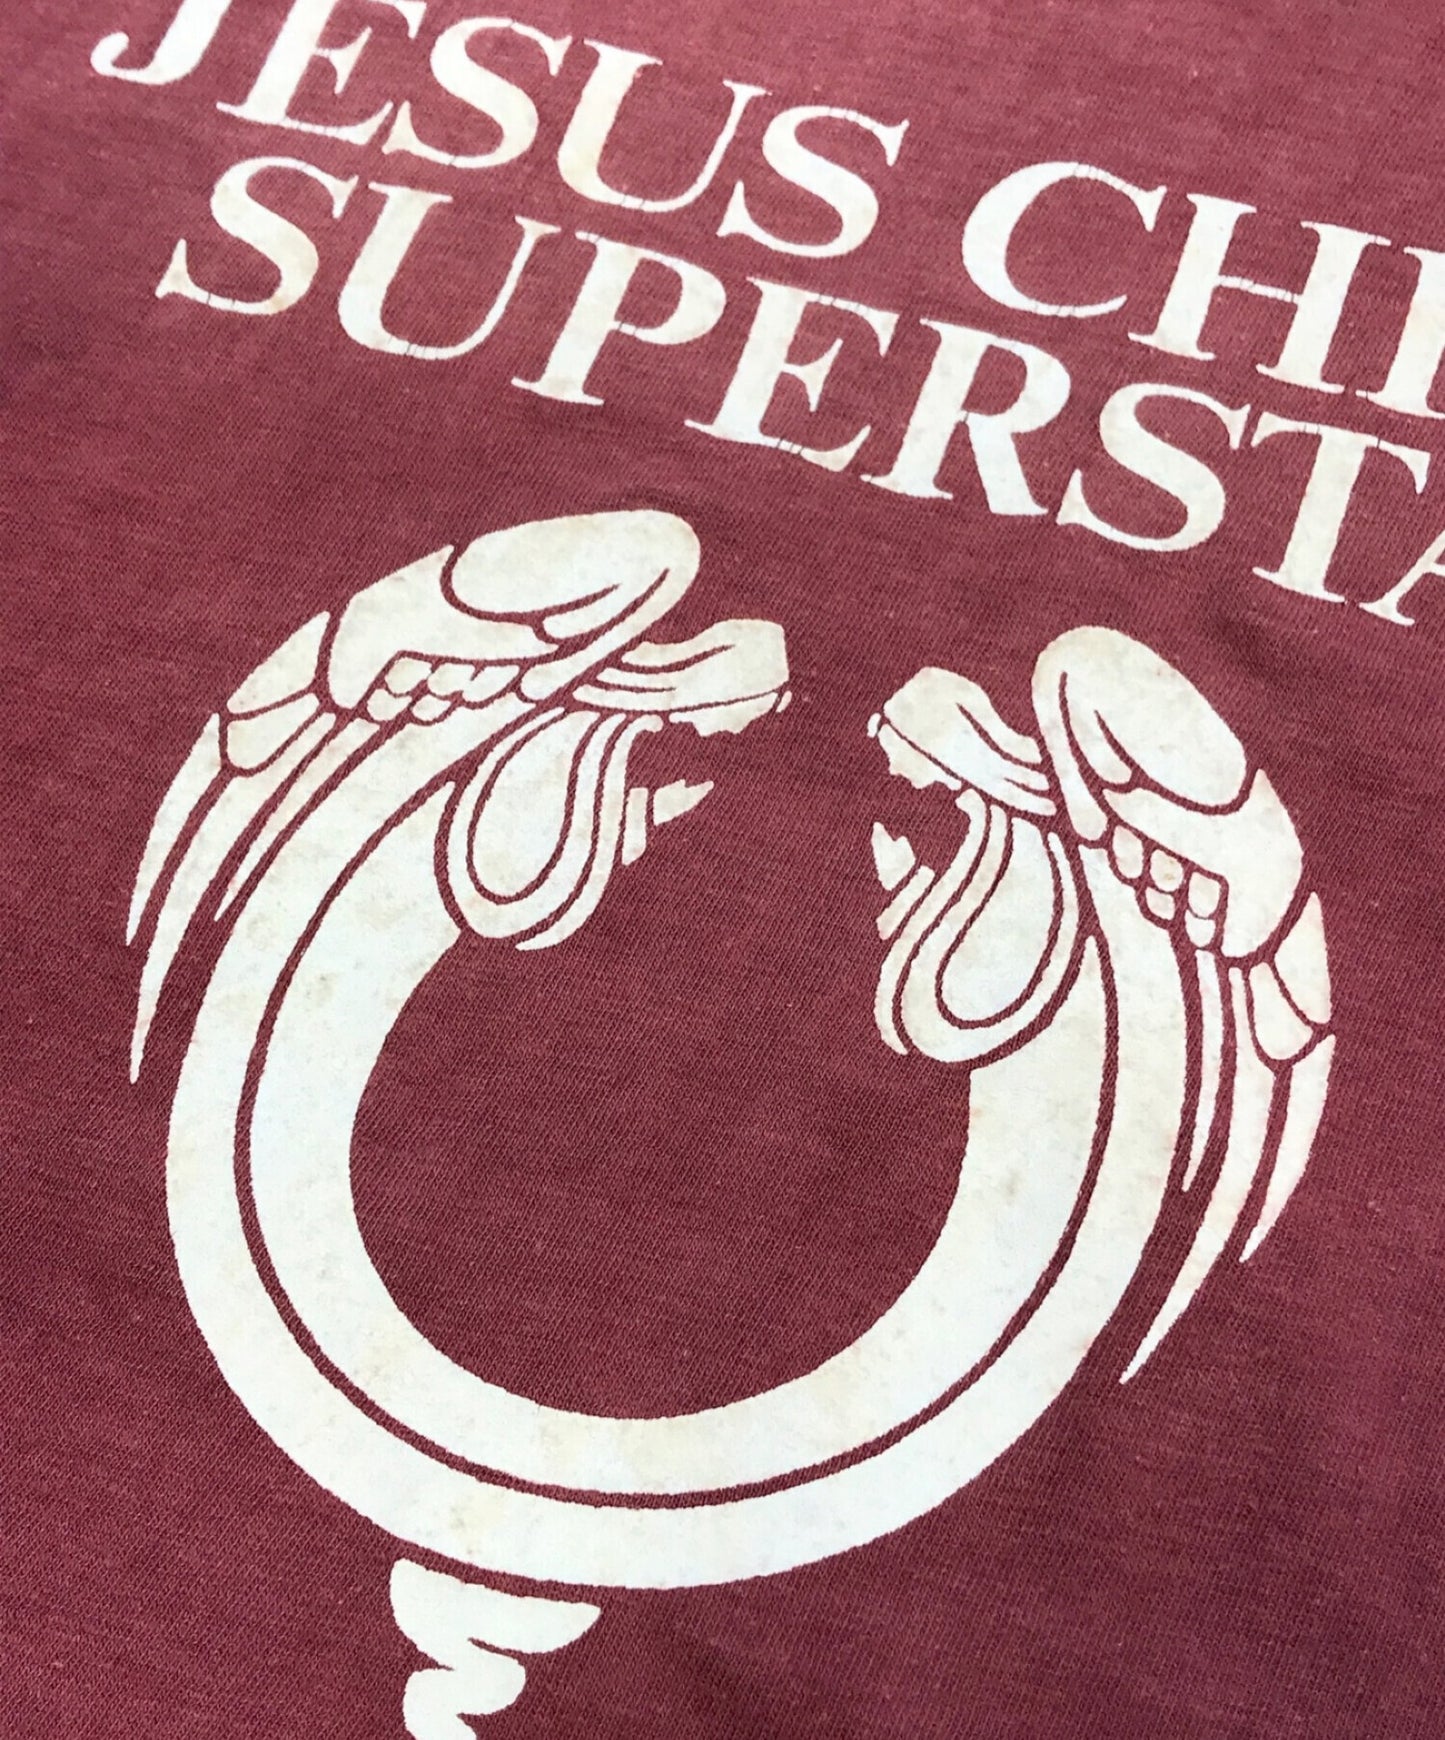 [Pre-owned] VINTAGE SHOWCO SOUND T-Shirt 70's JESUS CHRIST SUPERSTAR